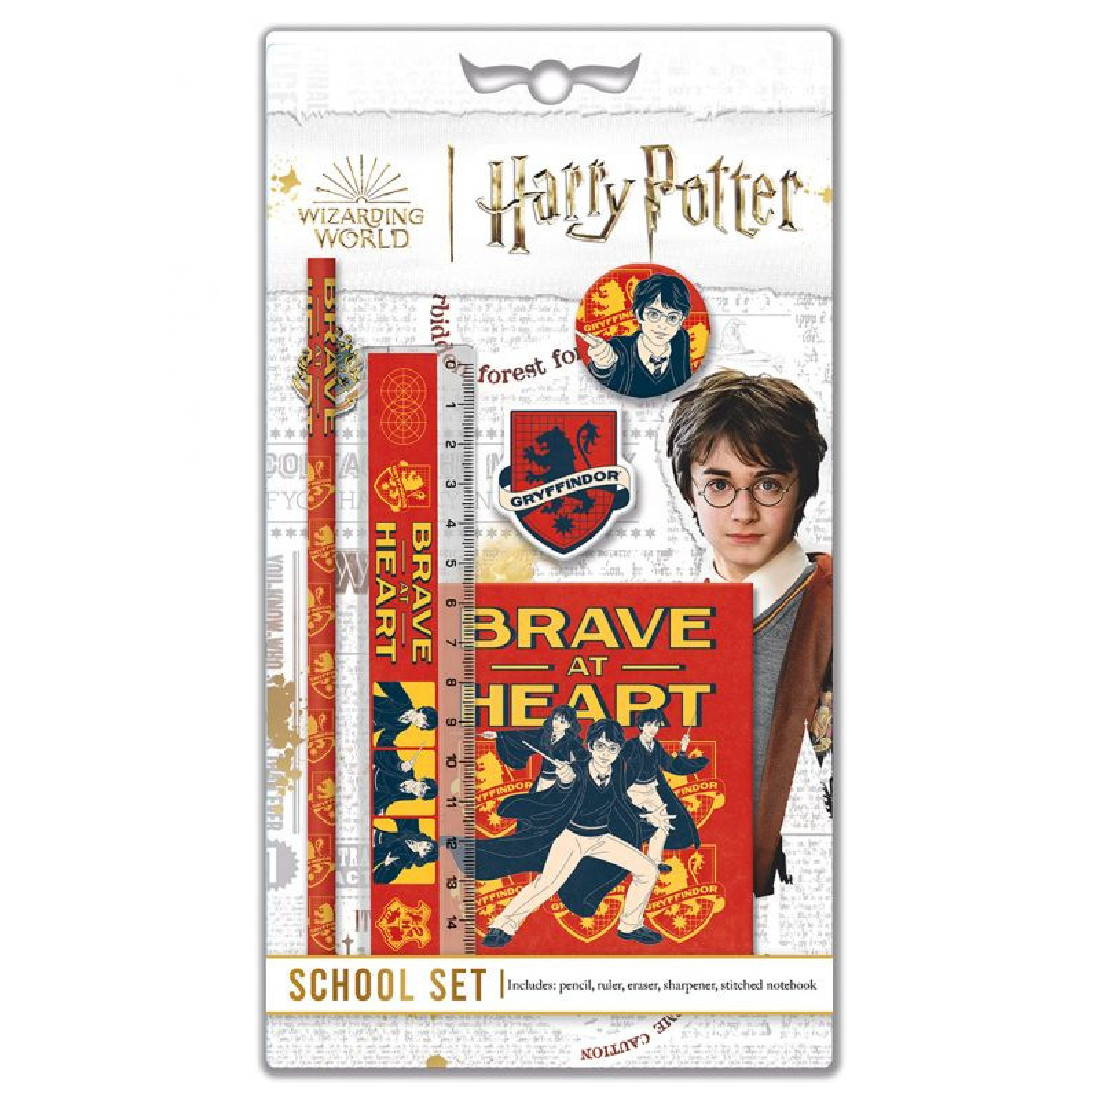 Blister γραφικών Brave at heart 234142 Harry Potter (2023)